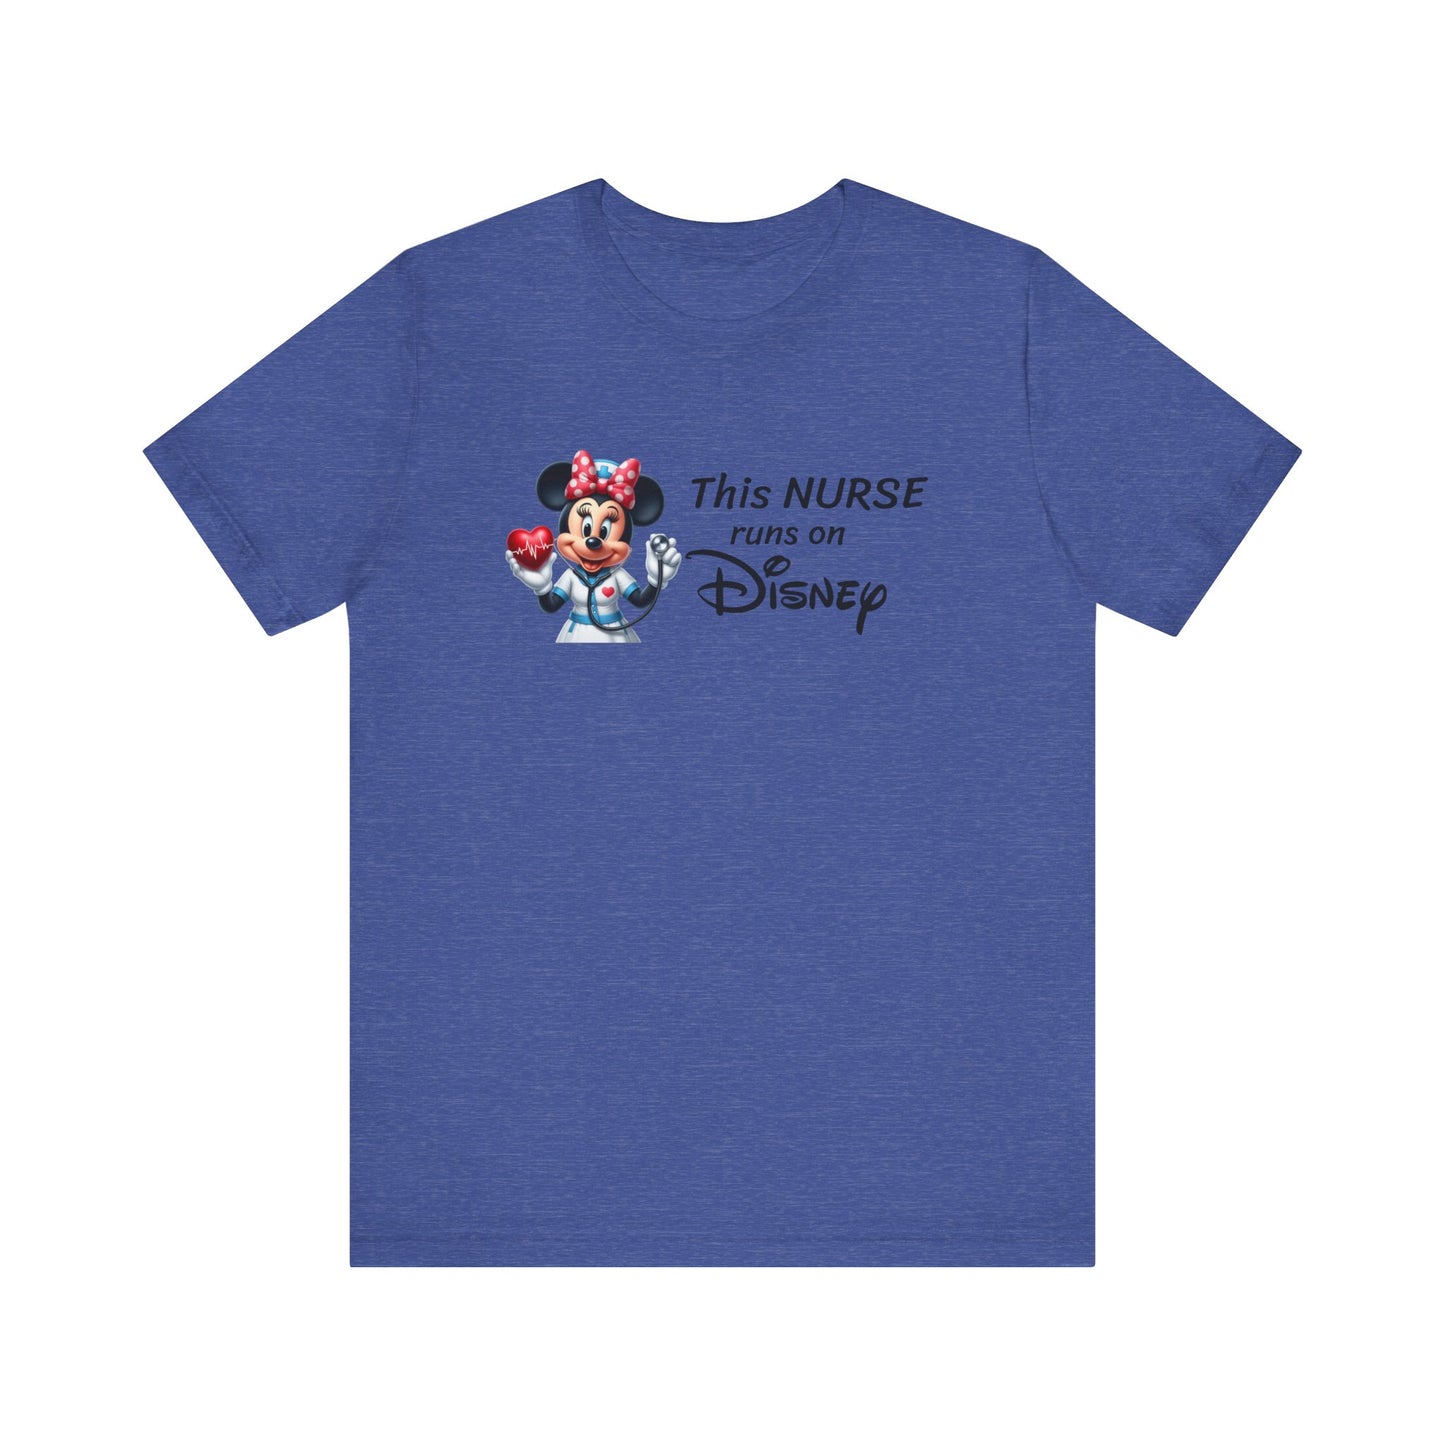 This Nurse runs on Disney- Short Sleeve T-shirt.